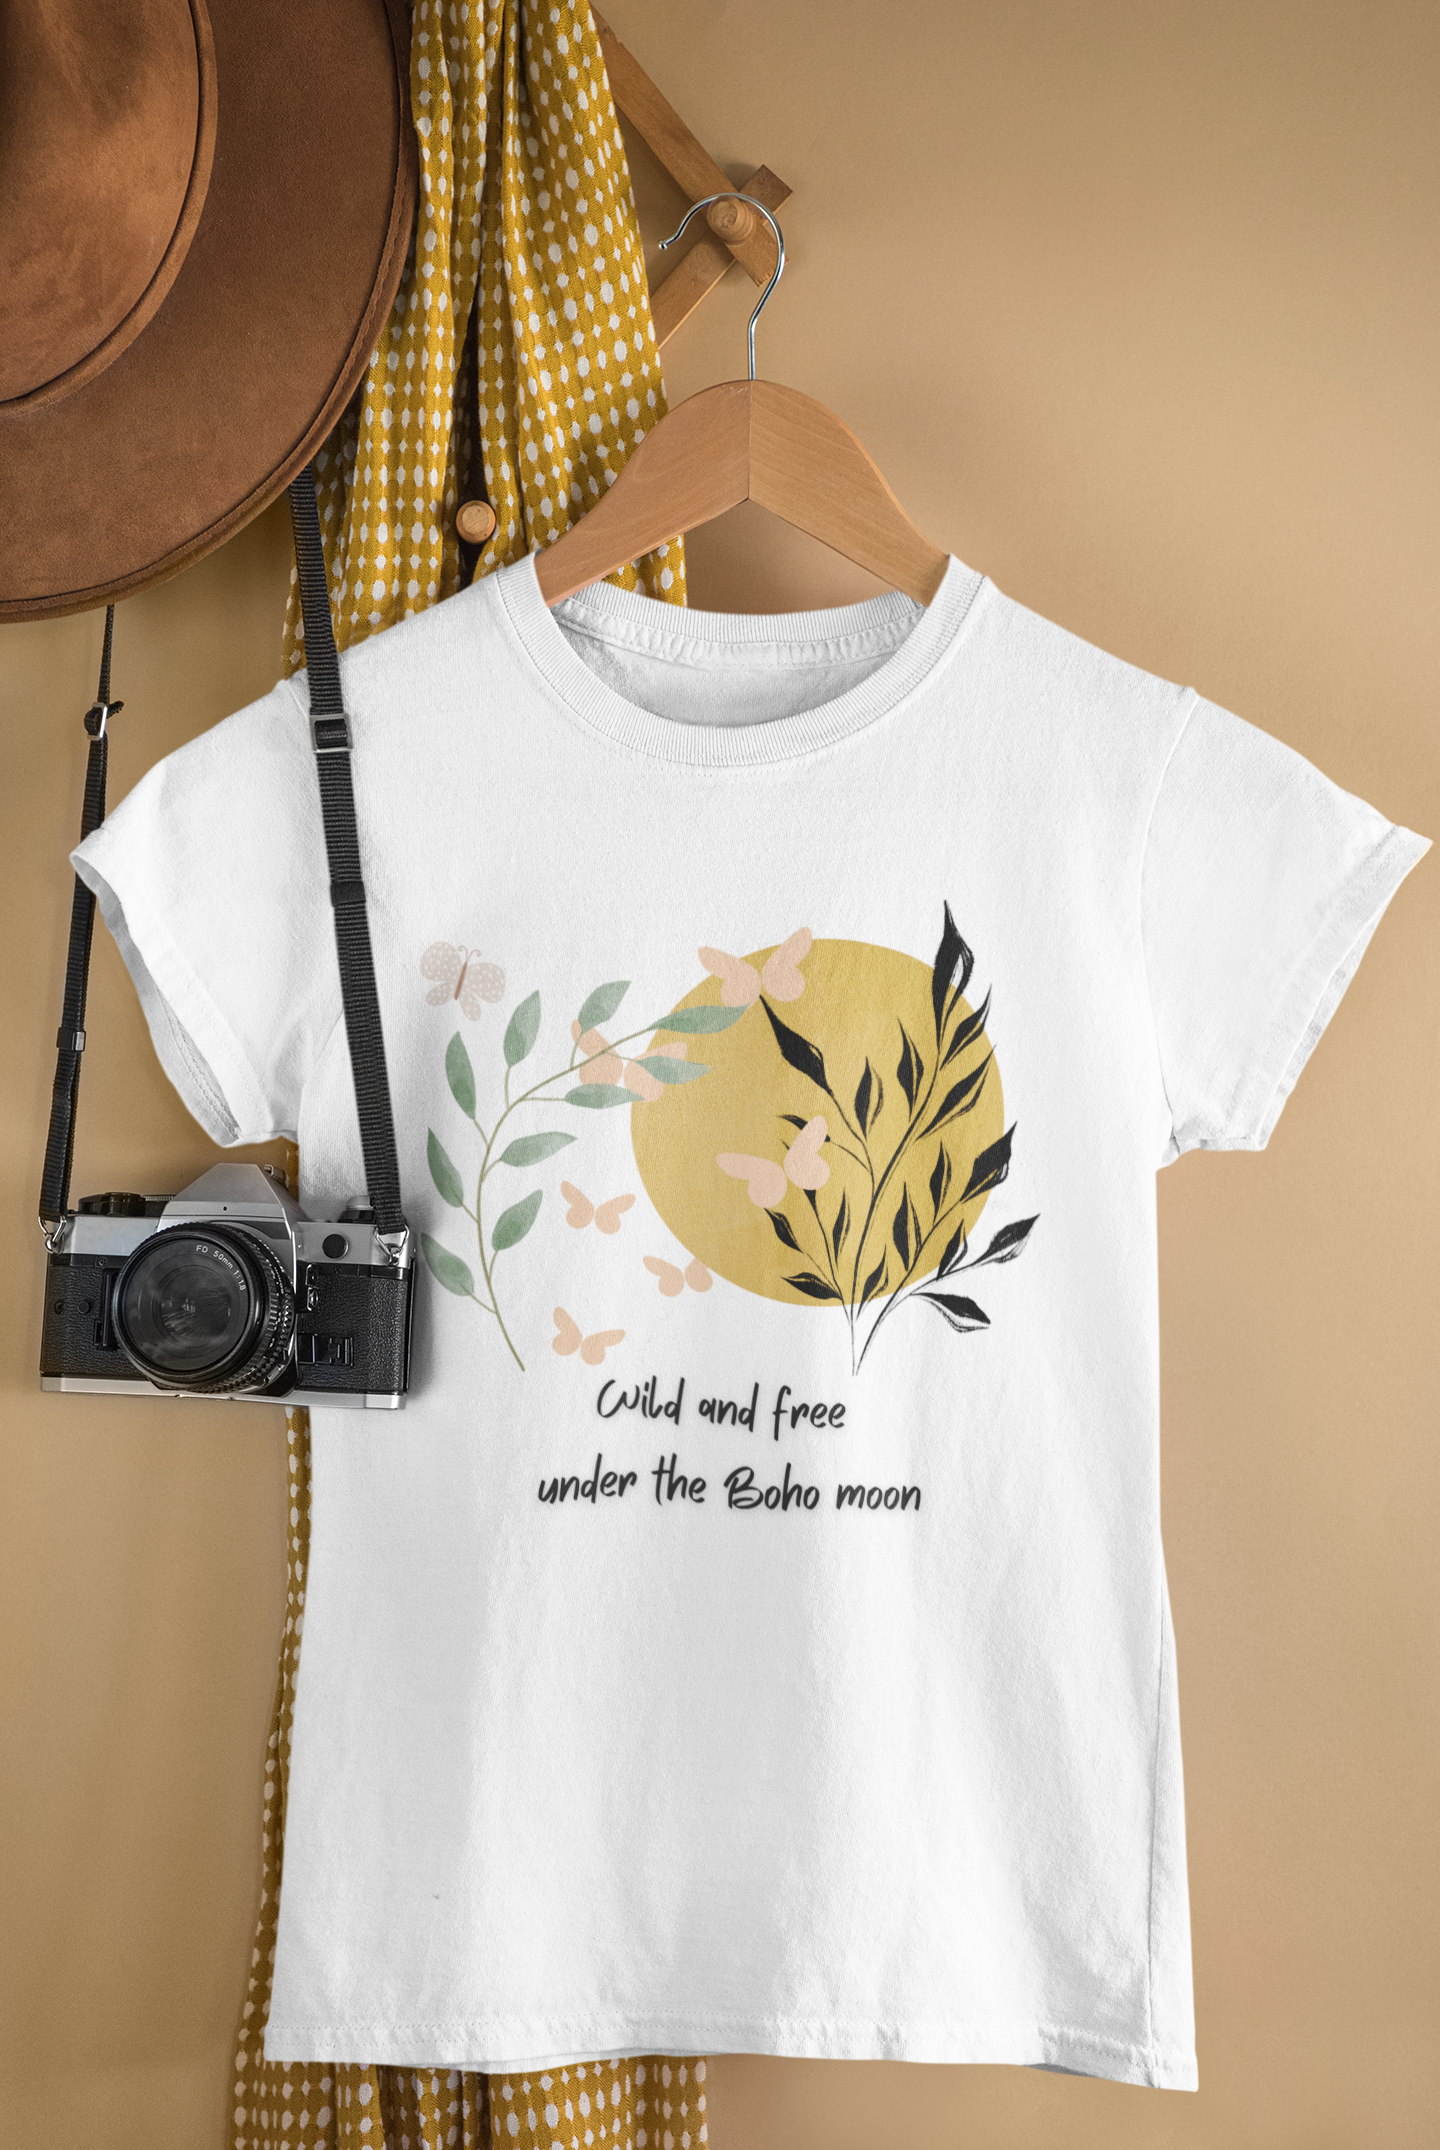 Kurzarm-T-Shirt im Boho-Vintage-Stil mit großem Mond.